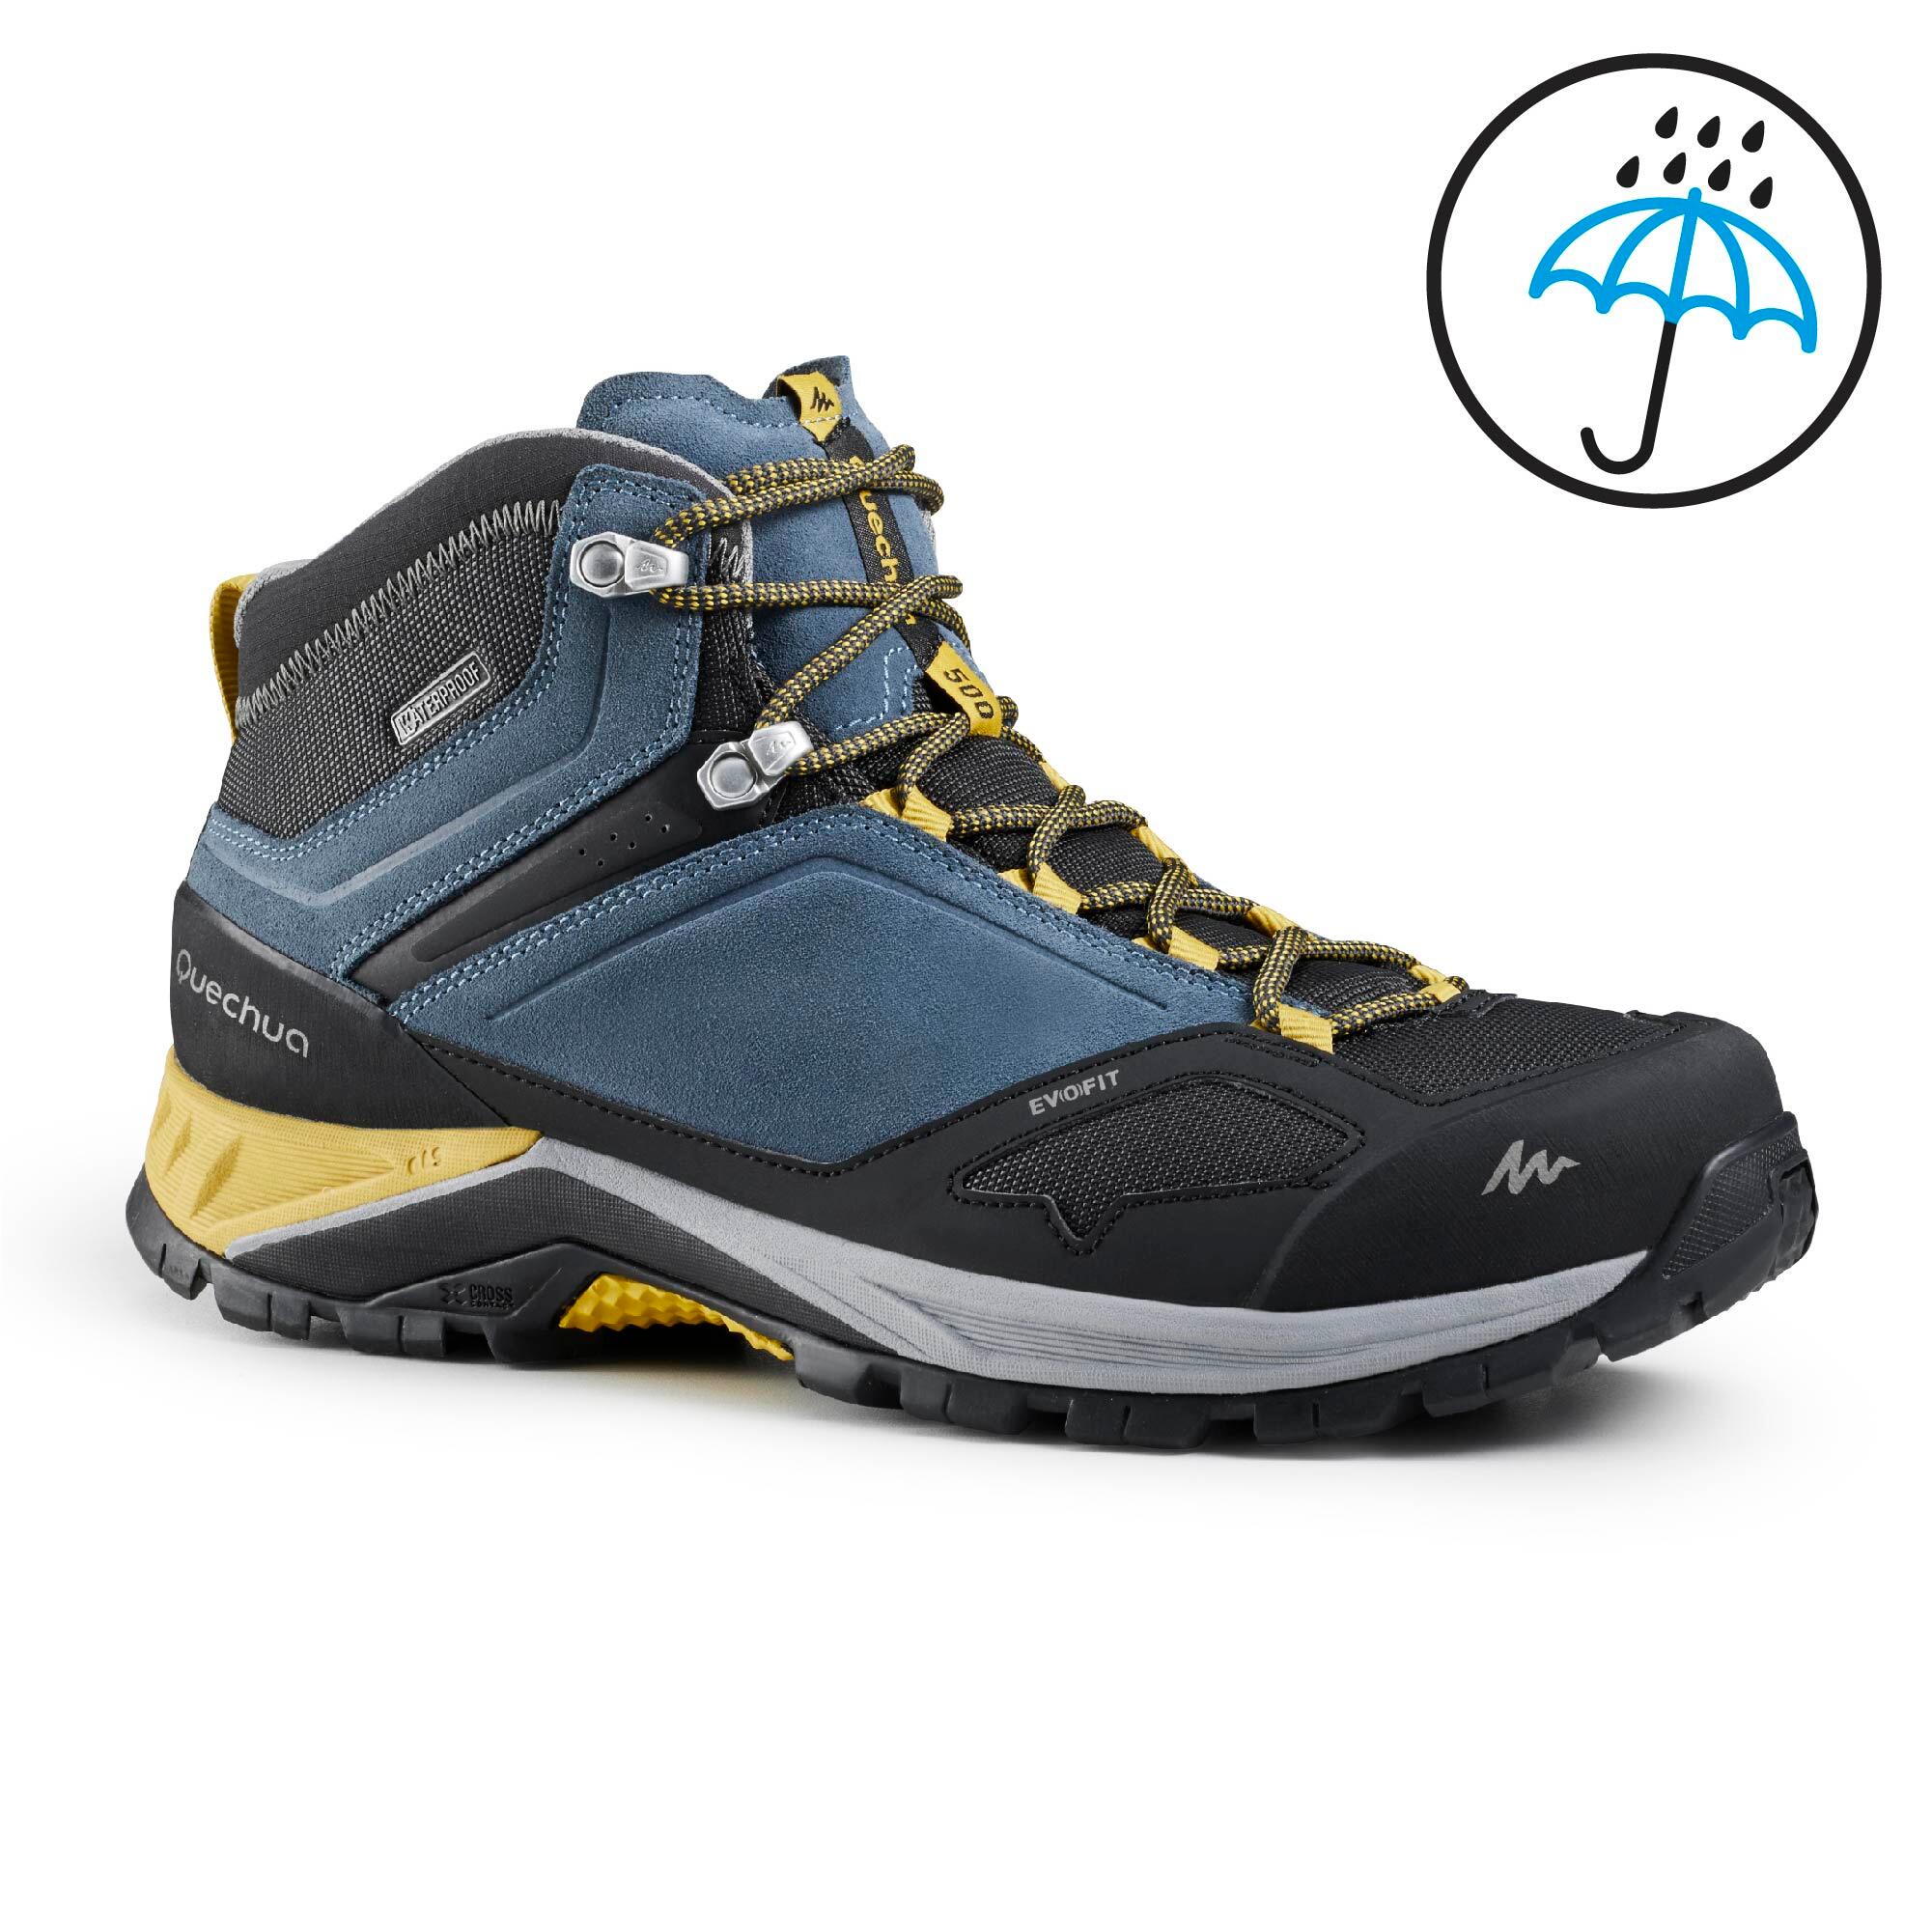 Men's waterproof mountain walking shoes - MH500 Mid - Blue/Yellow 3/4